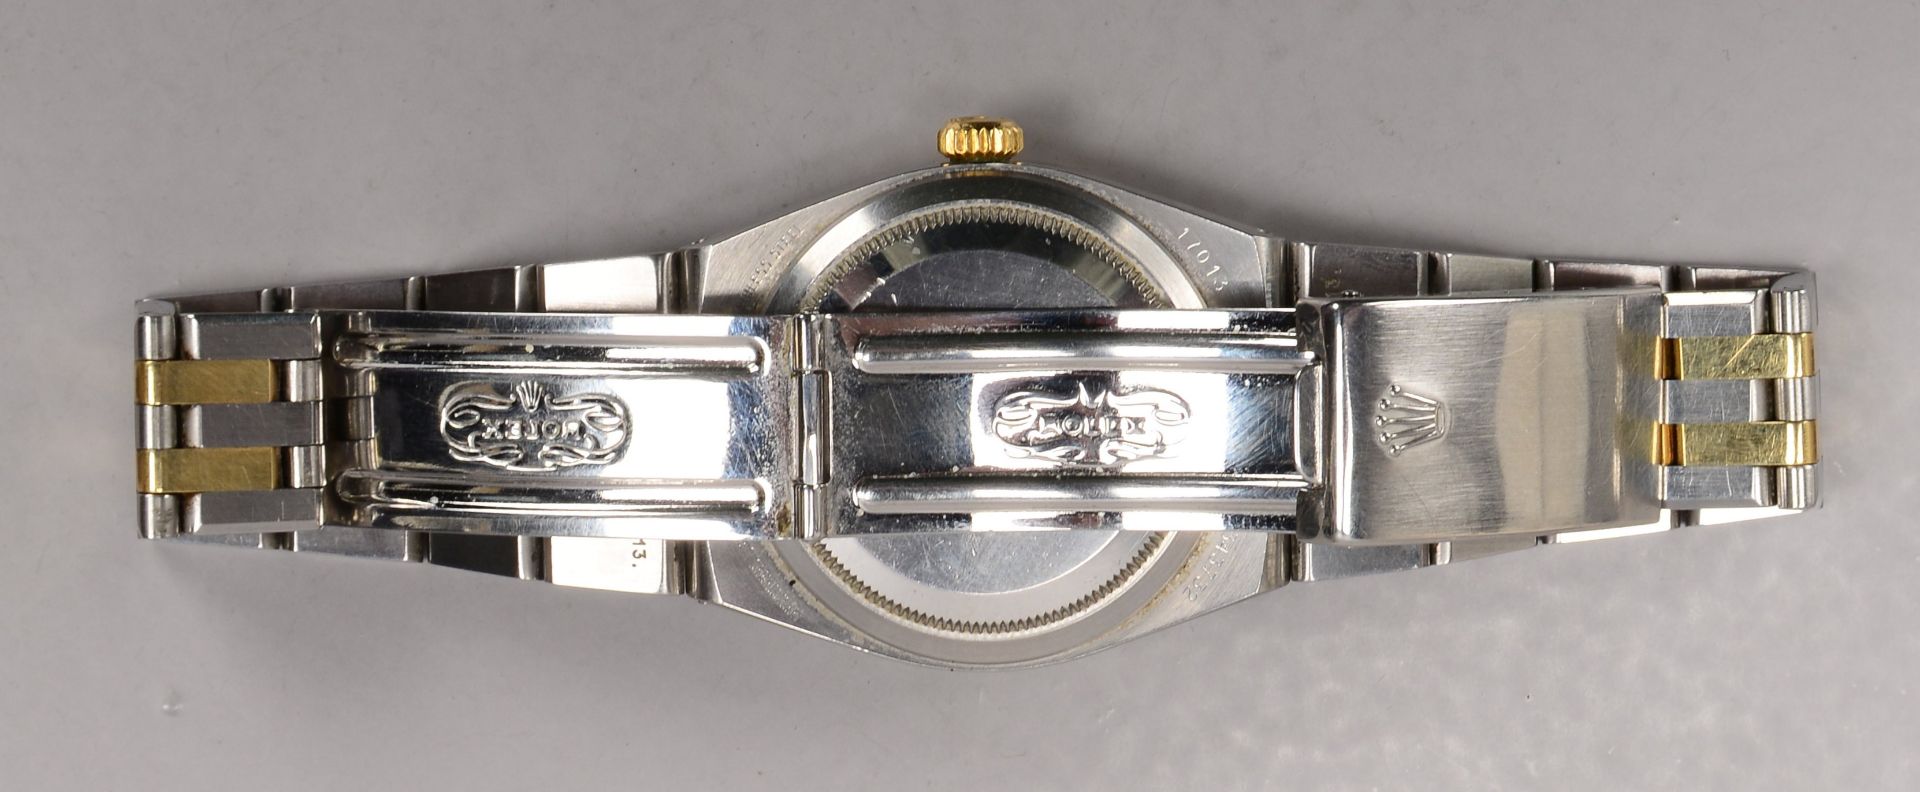 Herrenarmbanduhr (Chronometer der Superlative), Rolex Oysterquarz Datejust, - Image 3 of 3